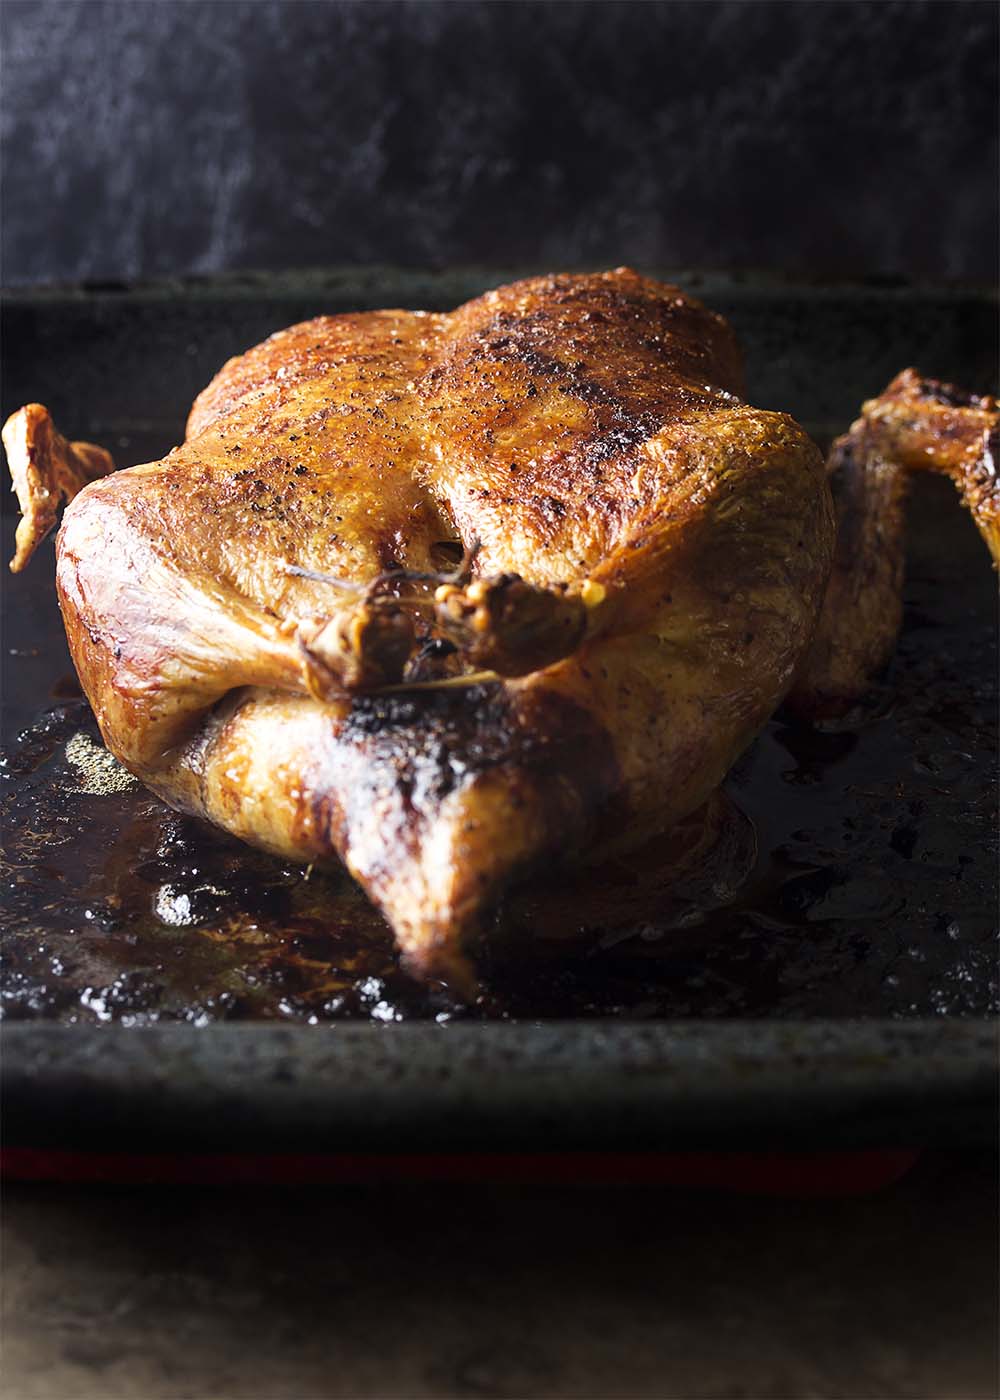 Roasted duck with deep brown crispy skin in a roasting pan.